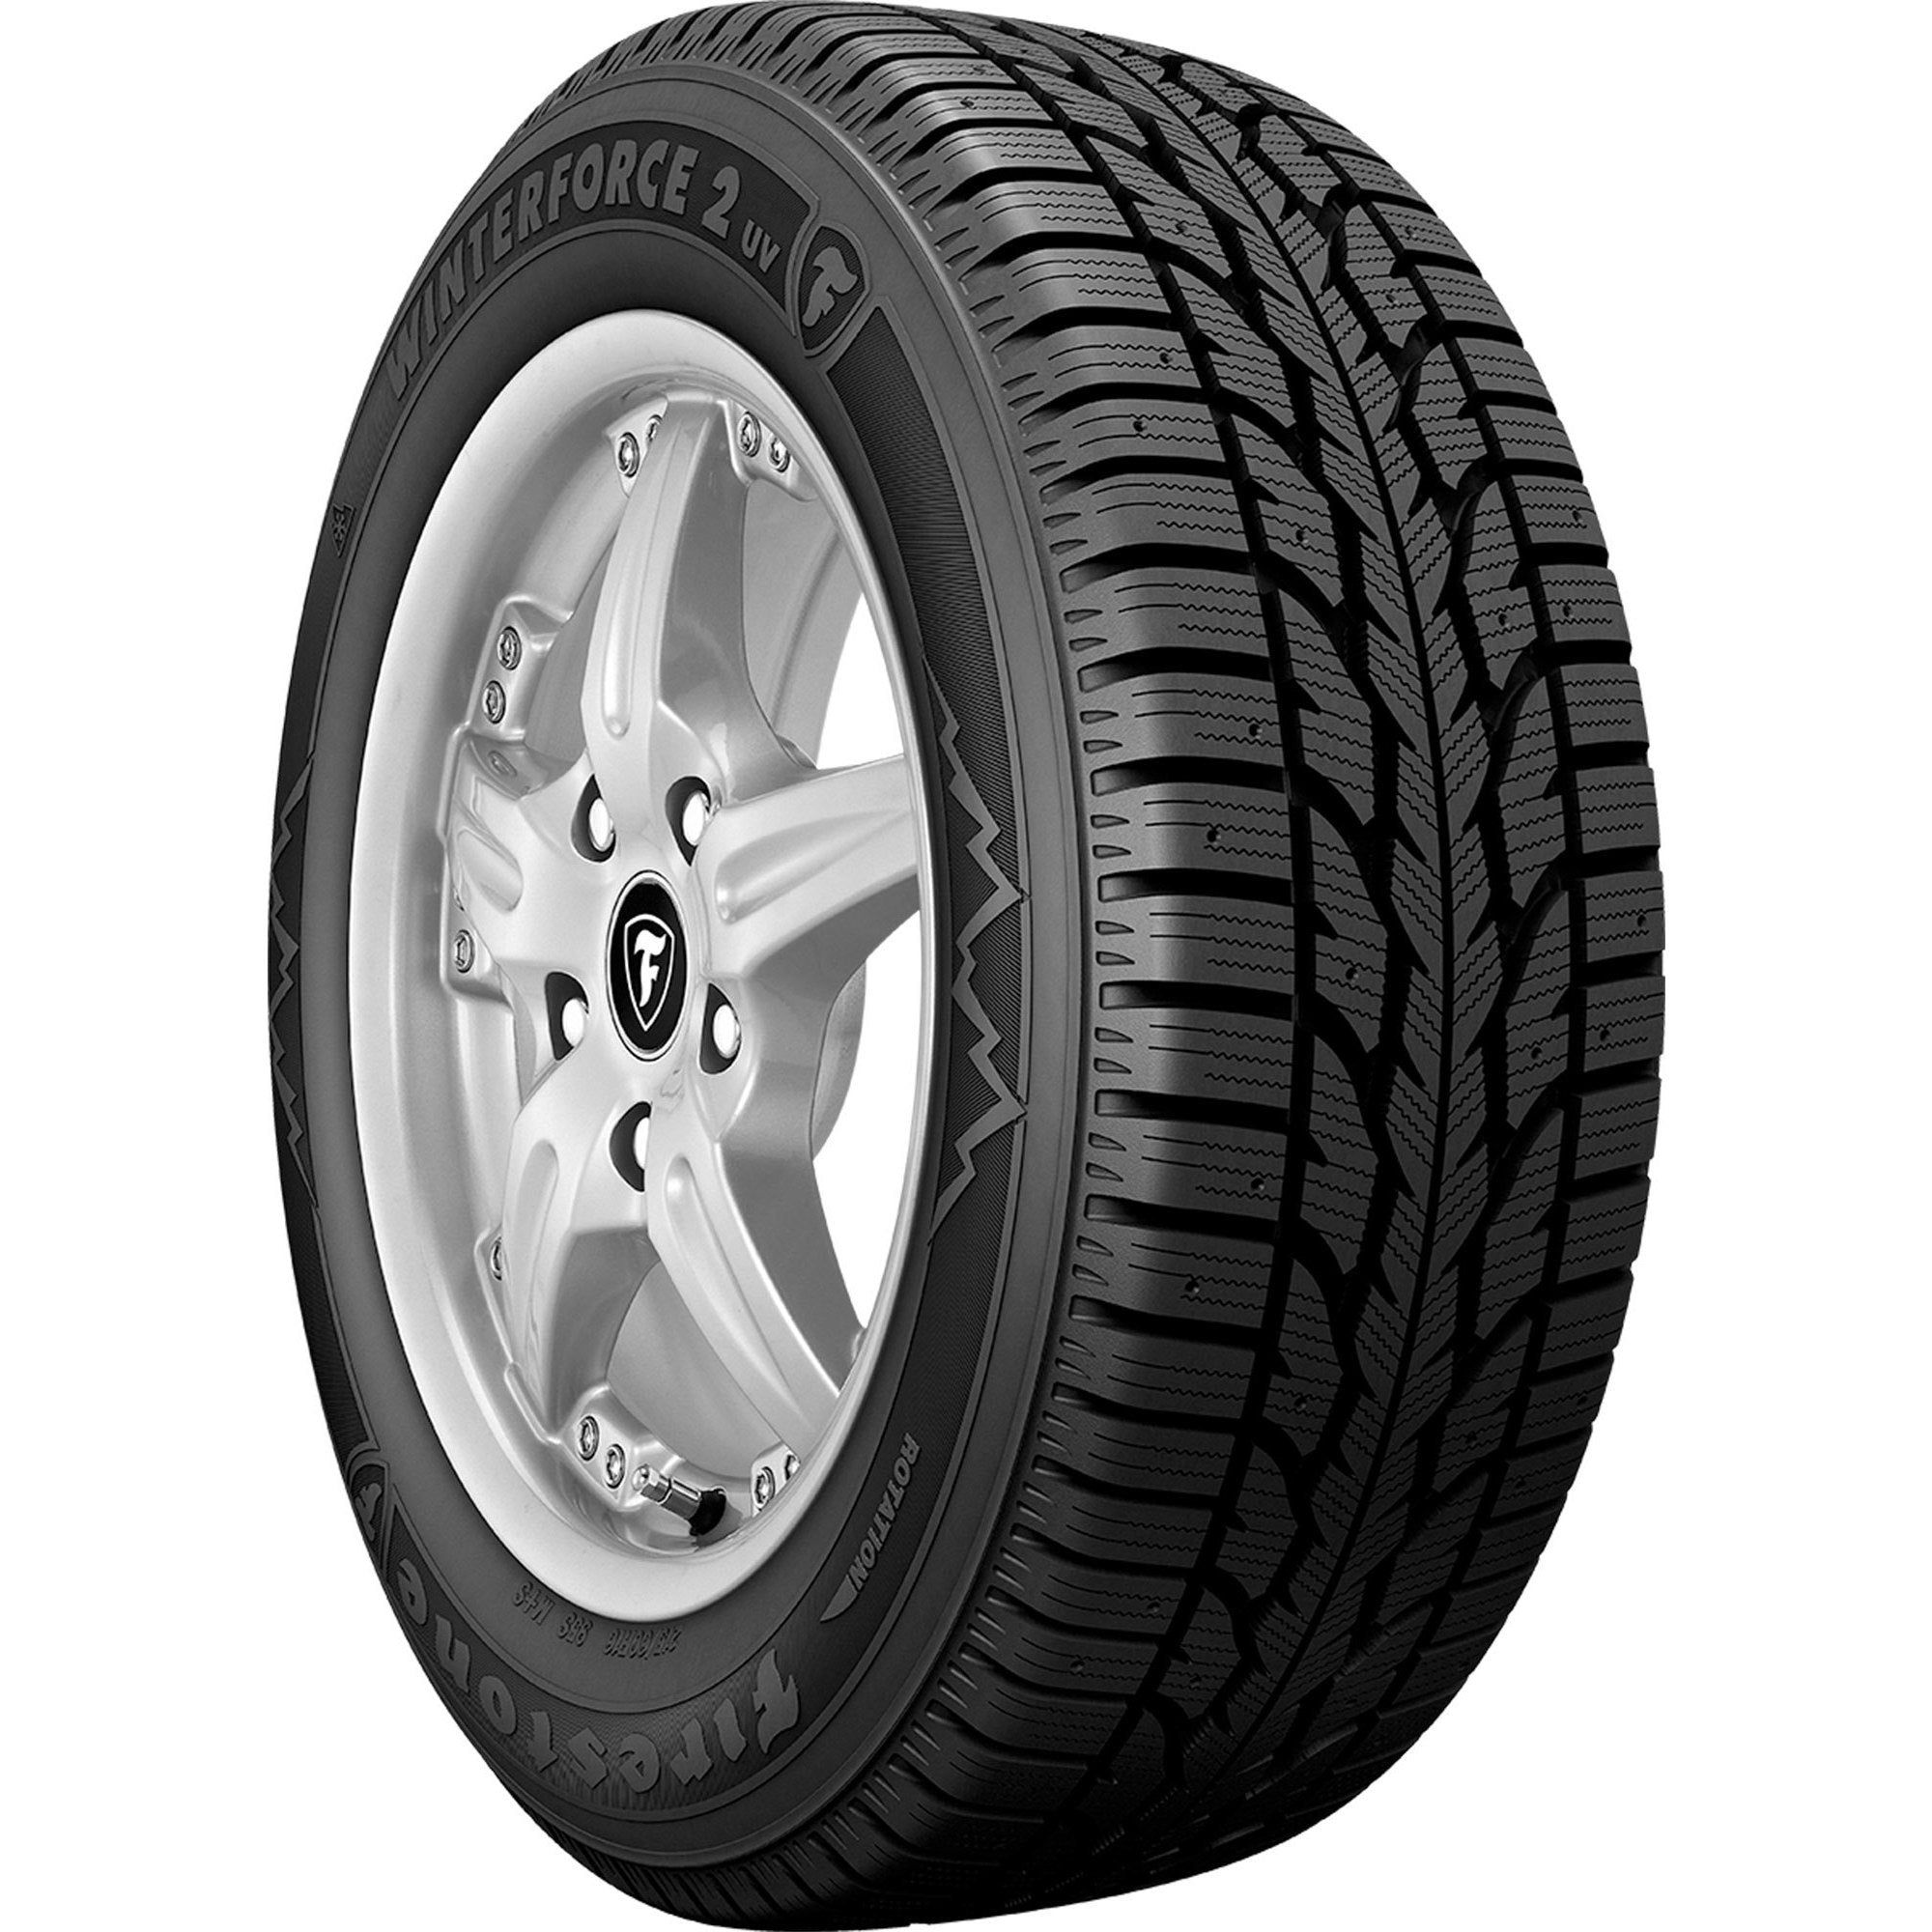 FIRESTONE WINTERFORCE2 UV 225/65R17 (28.5X8.9R 17) Tires